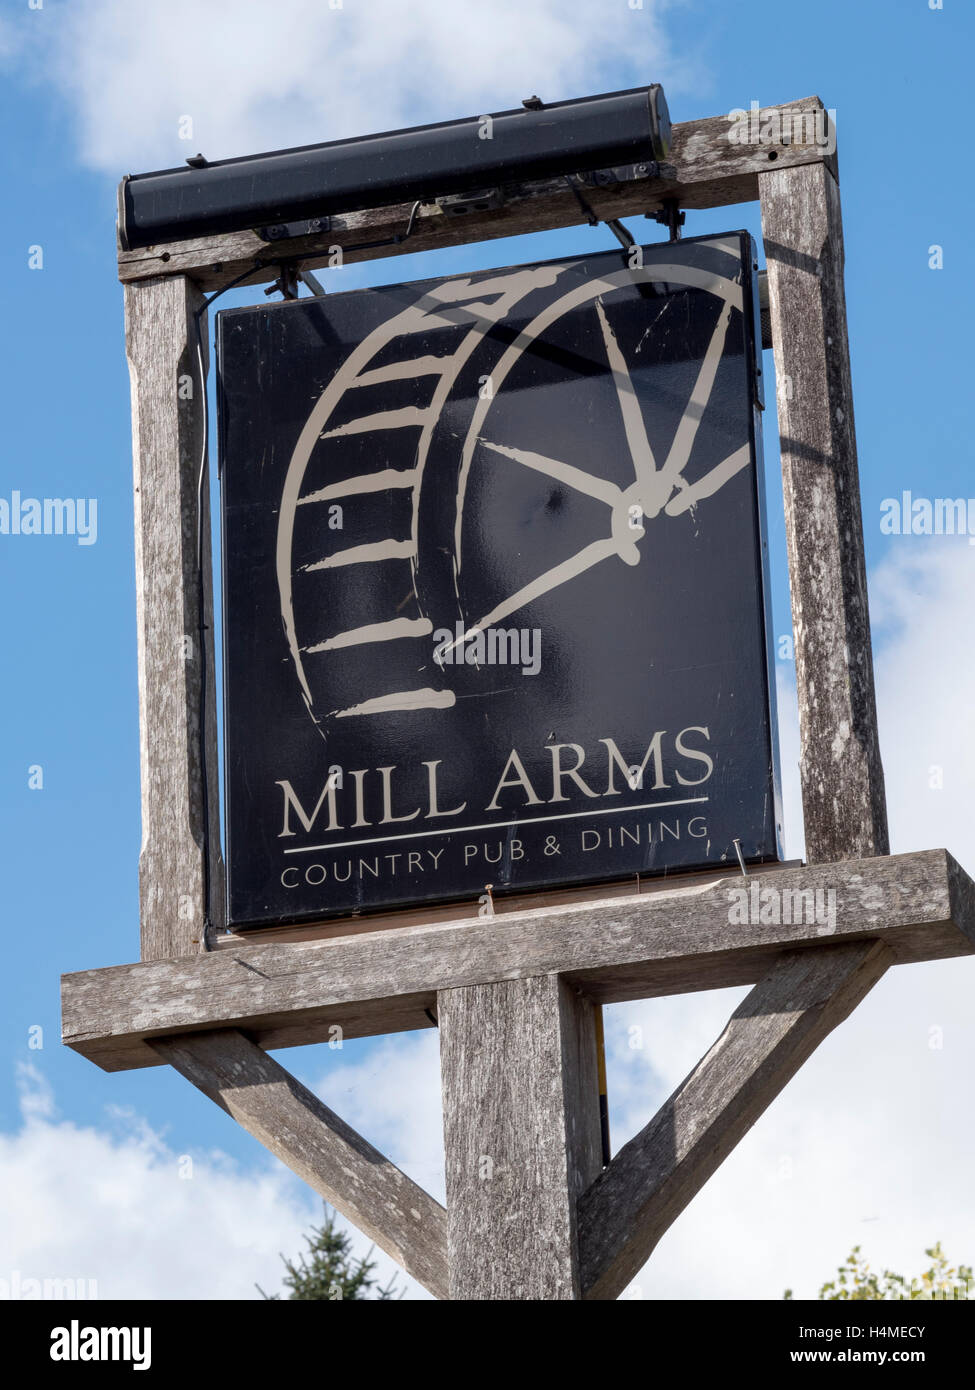 Pub sign for Mill Arms public house, Dunbridge, Mottisfont, Hampshire, England, UK Stock Photo